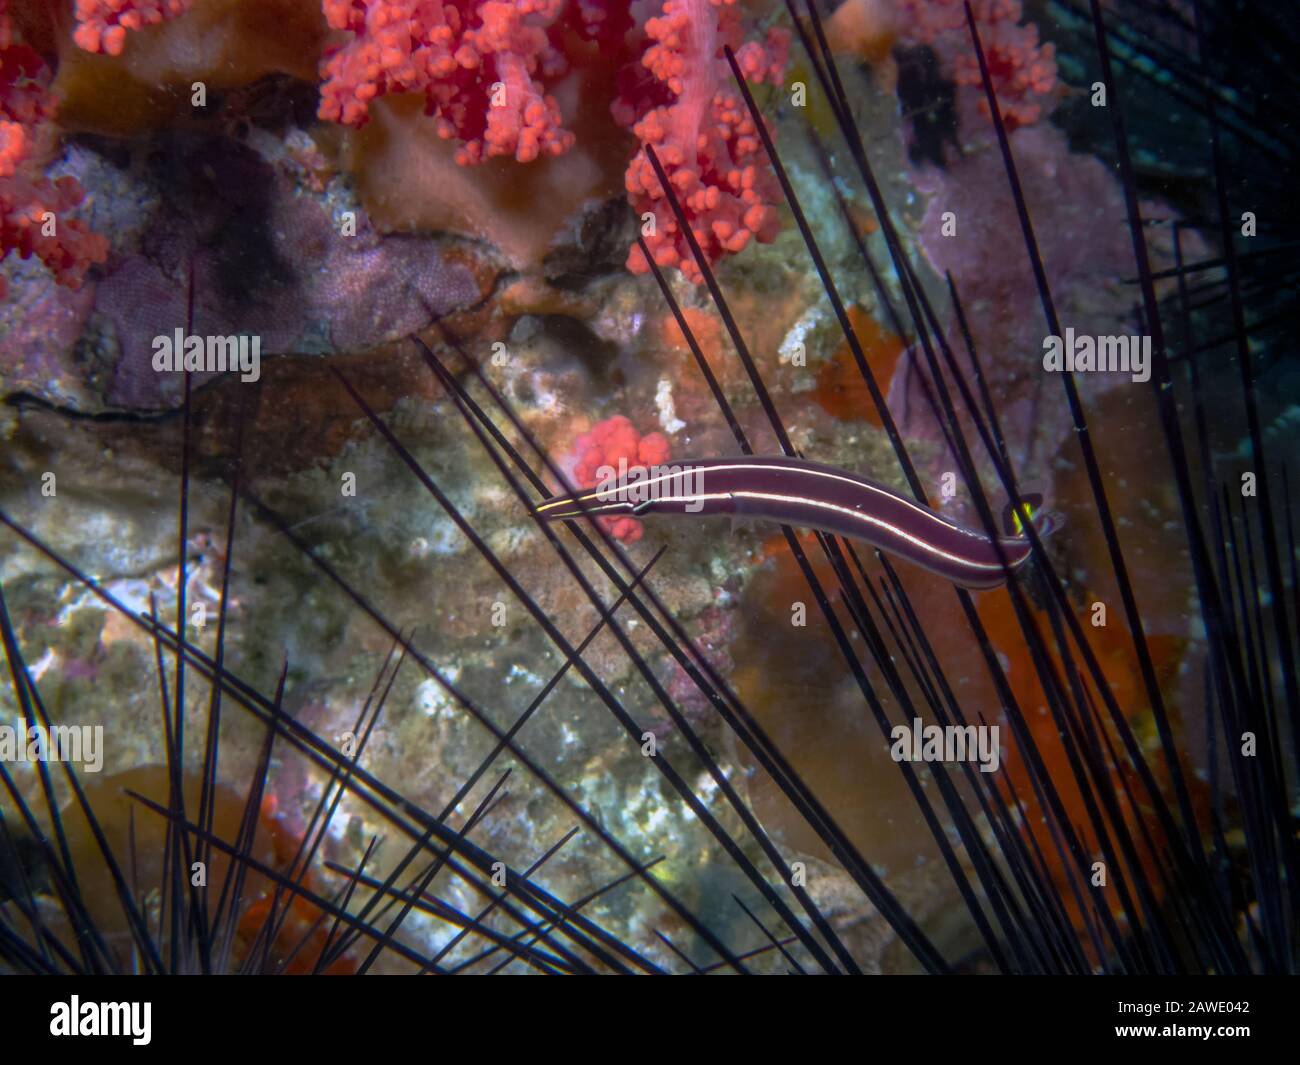 An Urchin Clingfish (Diademichthys lineatus) Stock Photo